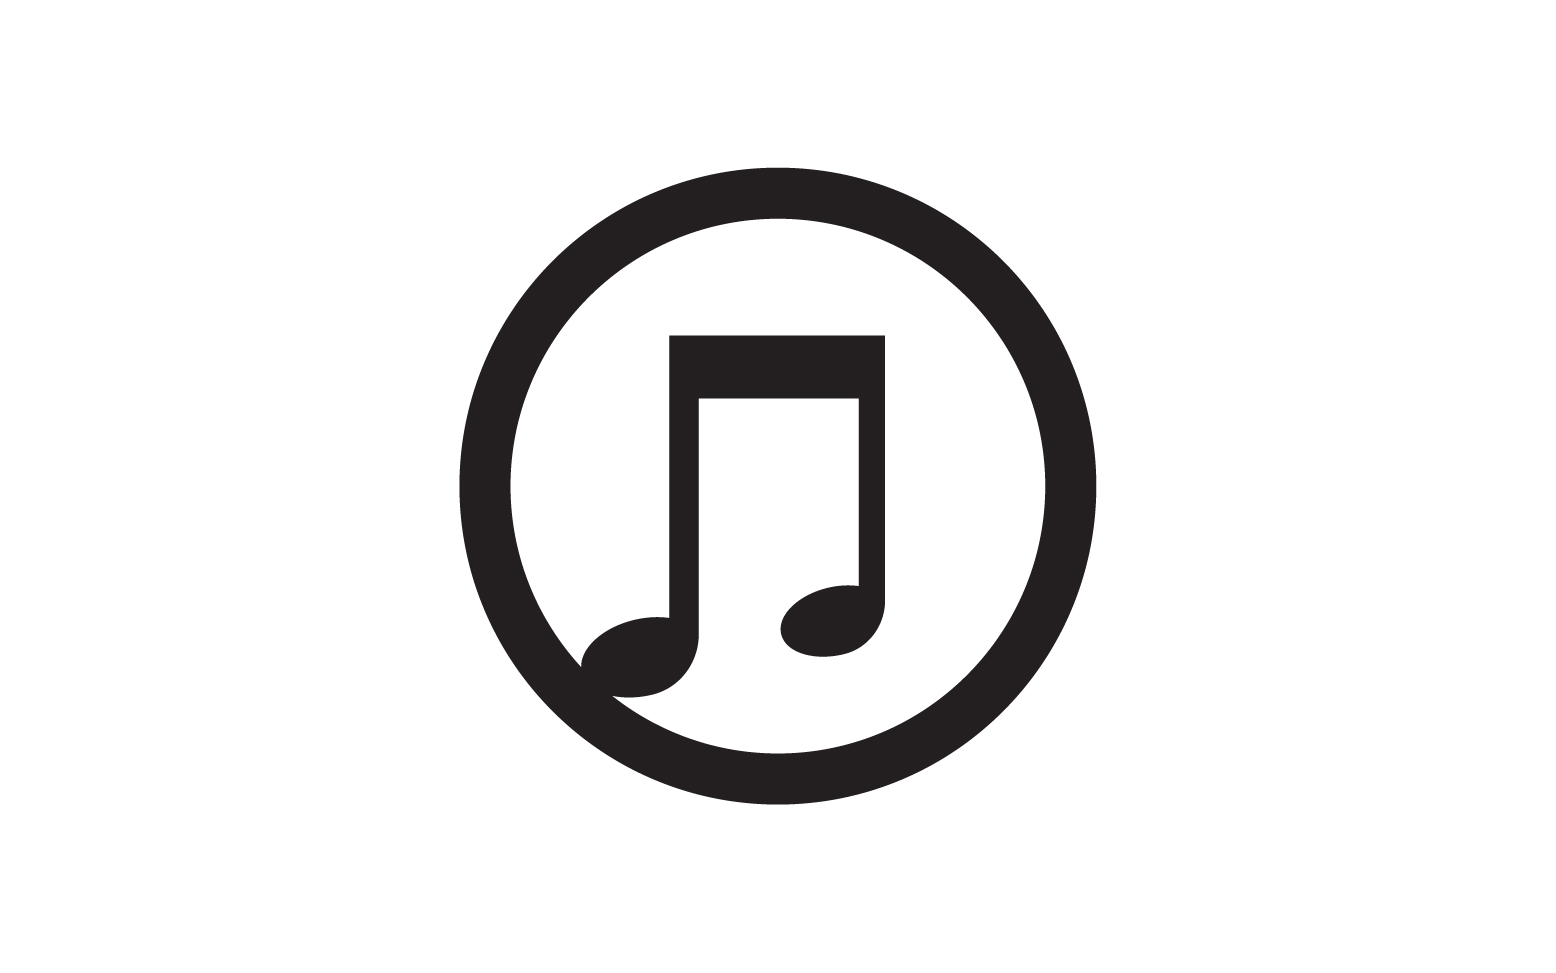 Music sound player app icon logo v.13